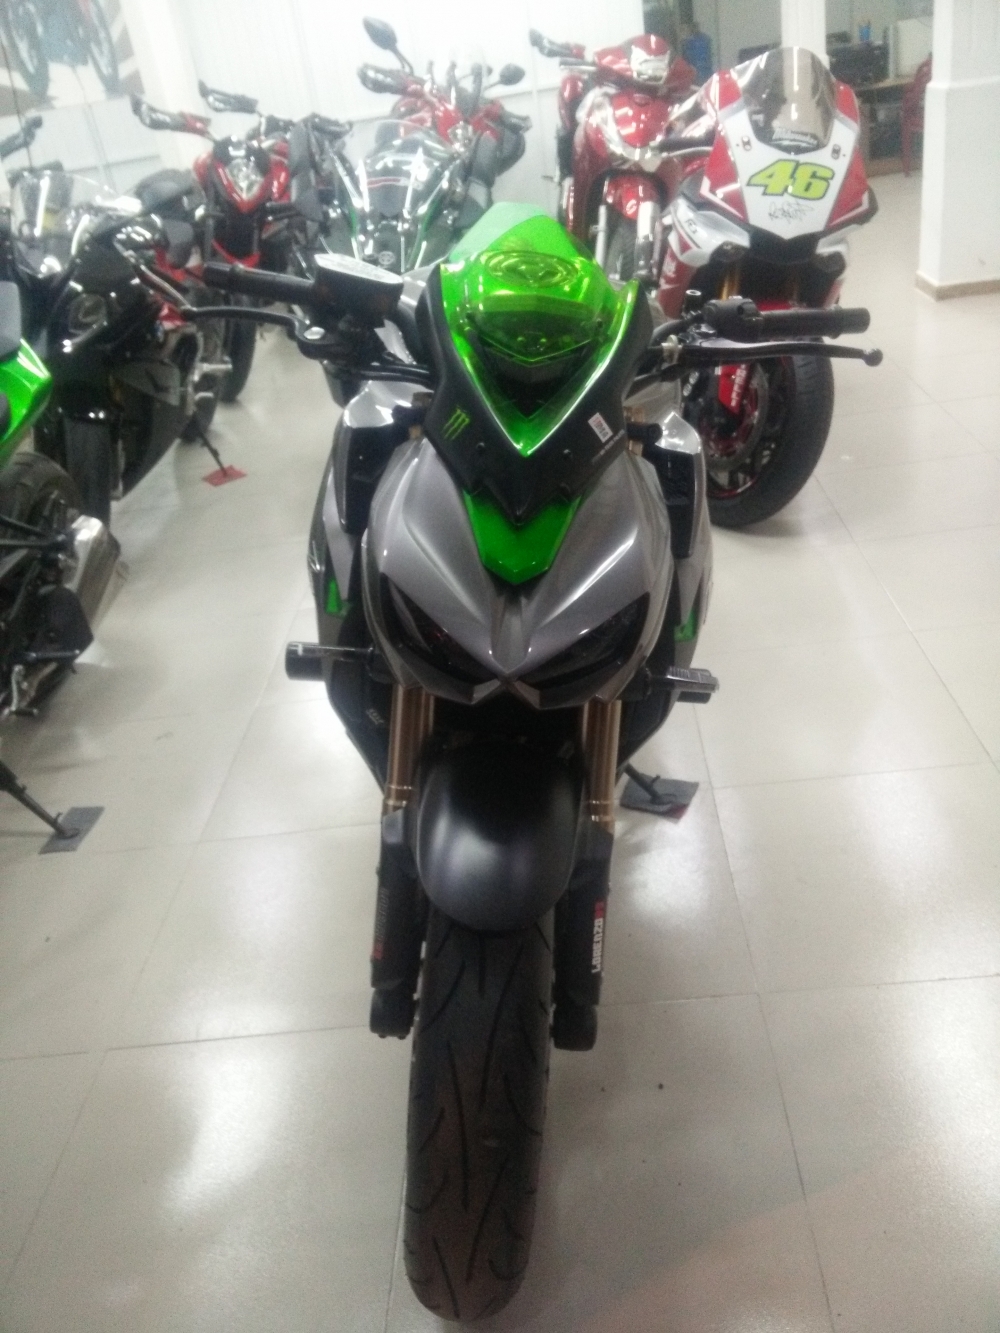 Showroom Moto Ken xe da qua su dung can ban z1000 than thanh xam xanh 2014 dep lung linh - 2